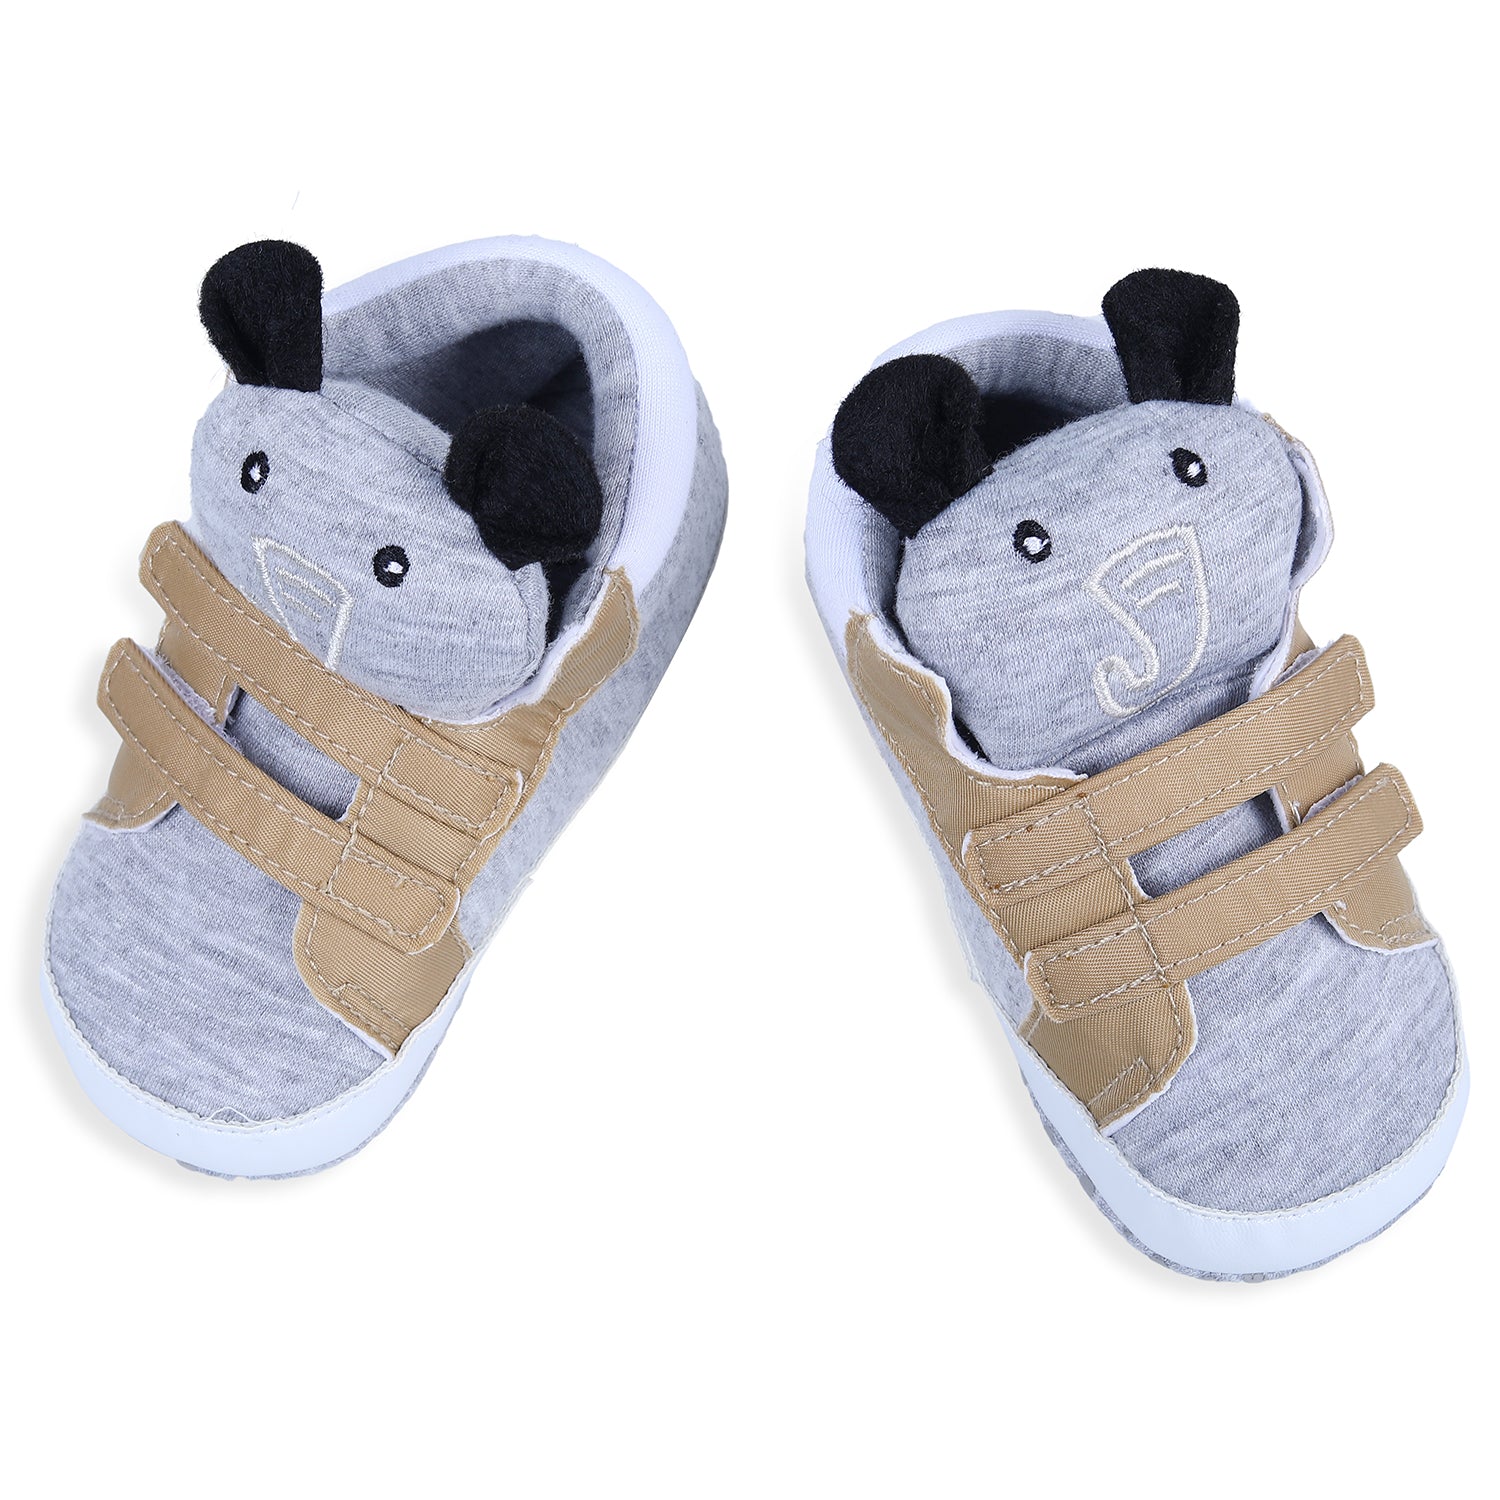 Elephant Cute And Stylish Comfy Velcro Booties - Grey - Baby Moo